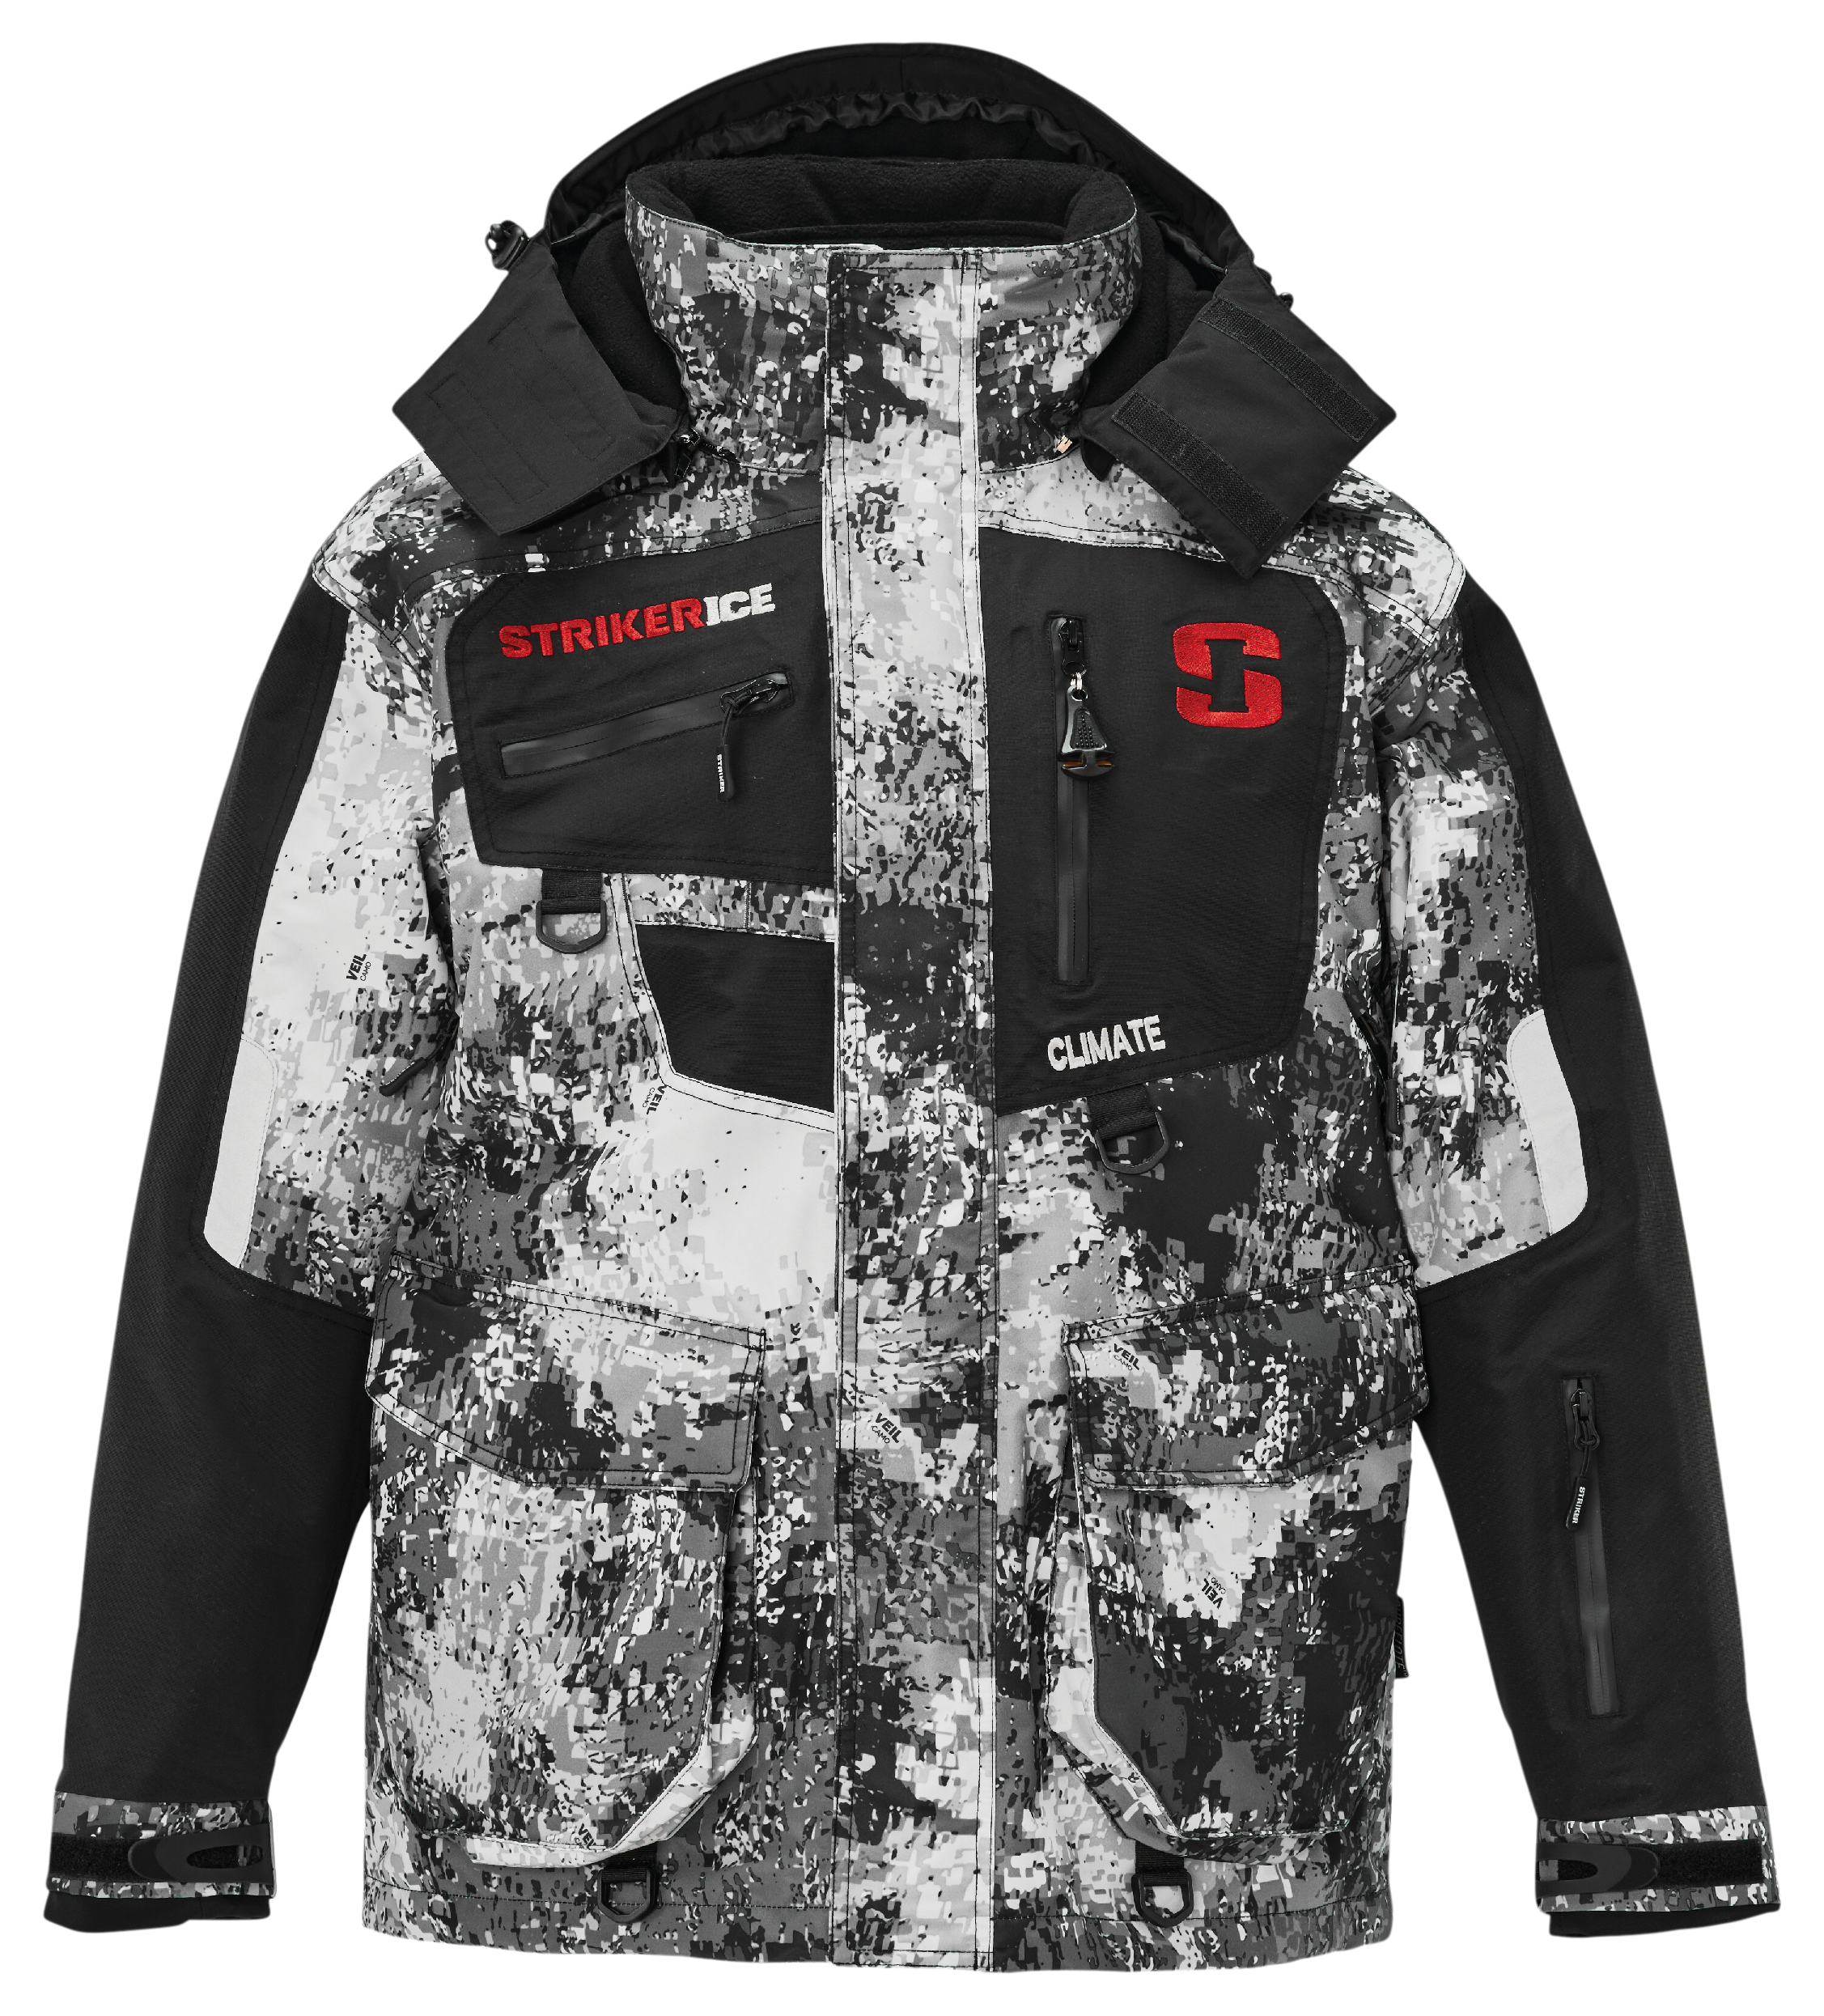 Striker Ice Climate Series Jacket System for Men - Veil Stryk - 3XL -  StrikerICE